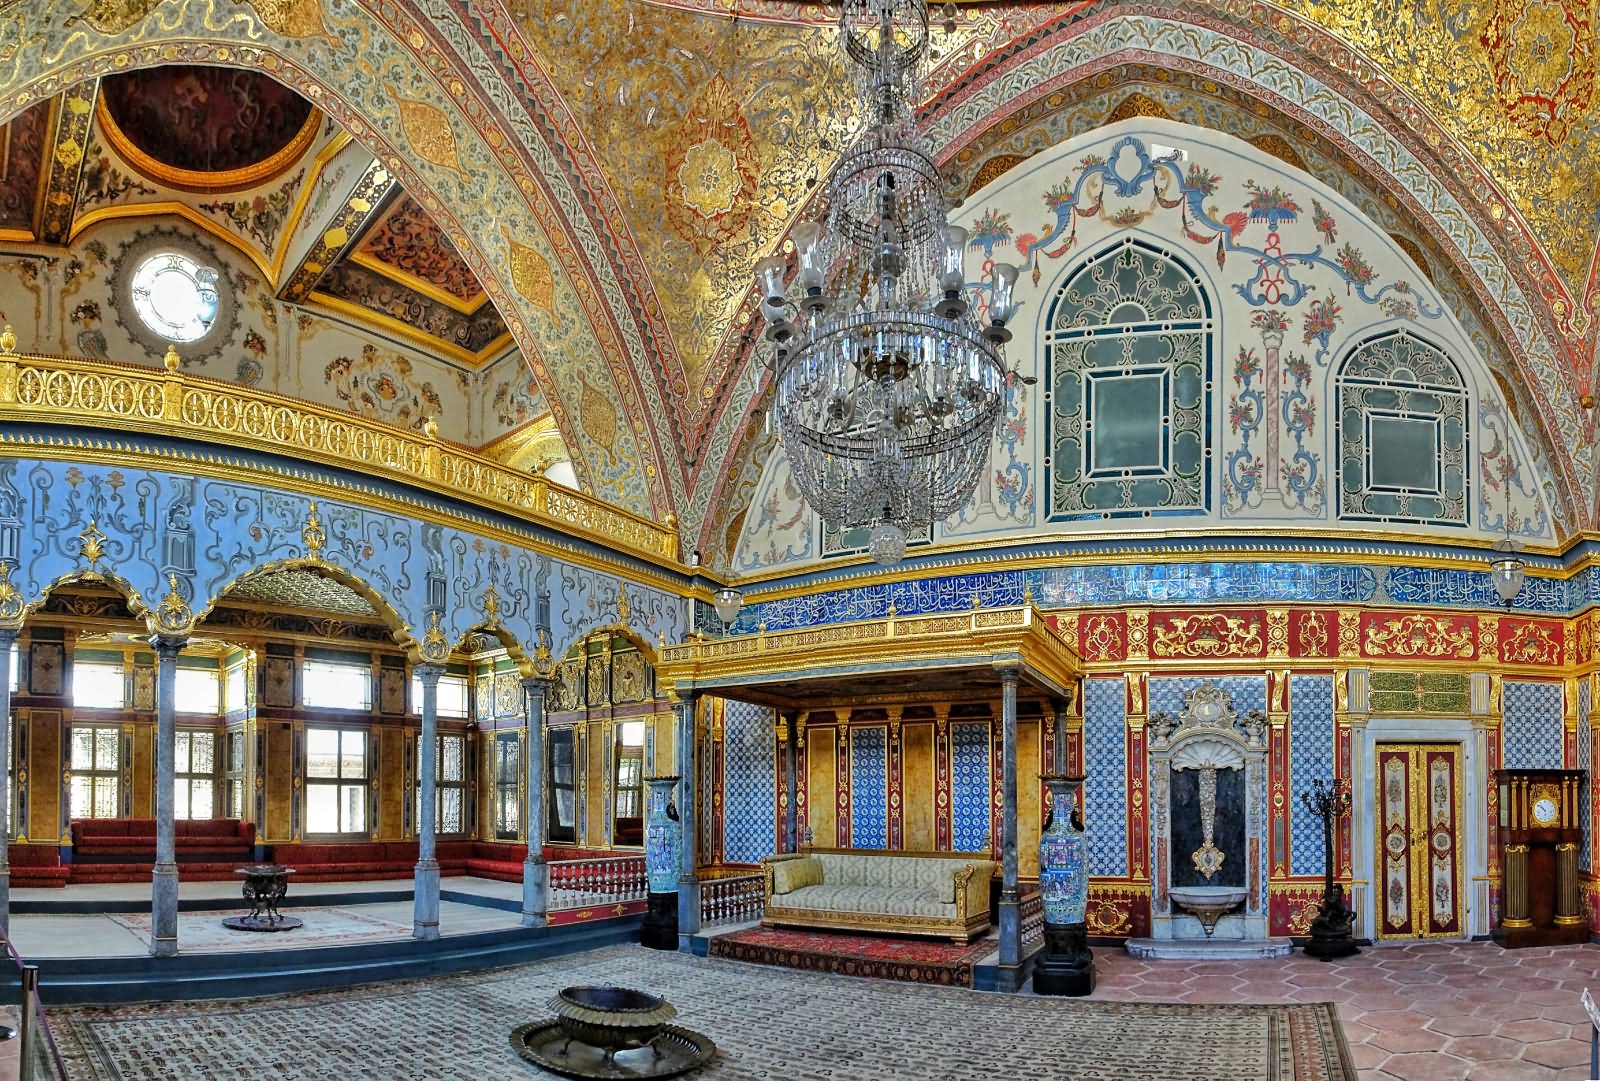 Beautiful Architecture Inside The Topkapi Palace, Istanbul